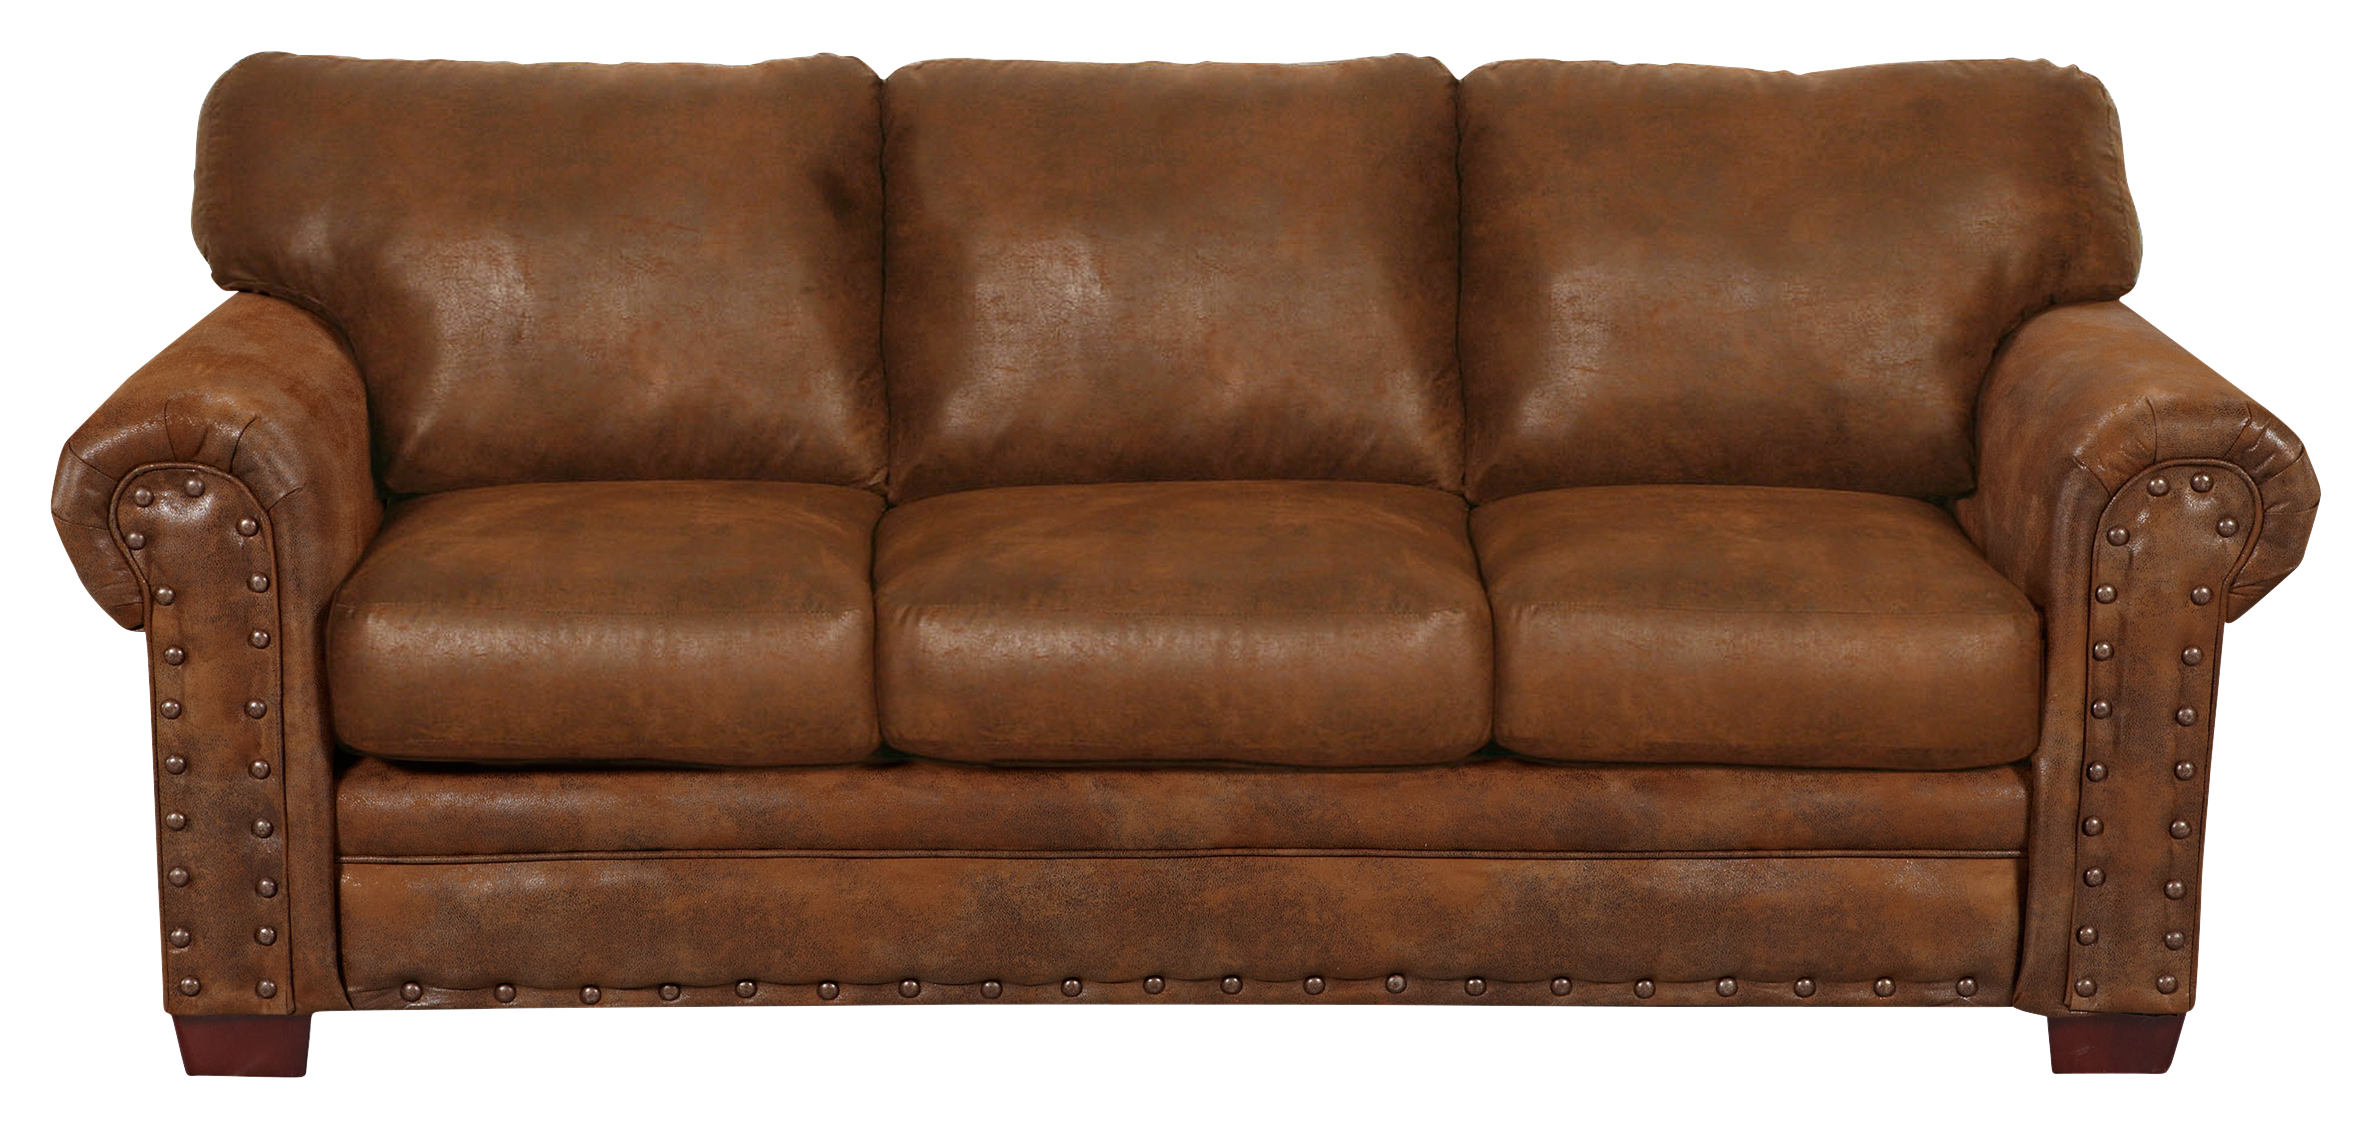 American Furniture Classics Lodge Buckskin Collection Sleeper Sofa